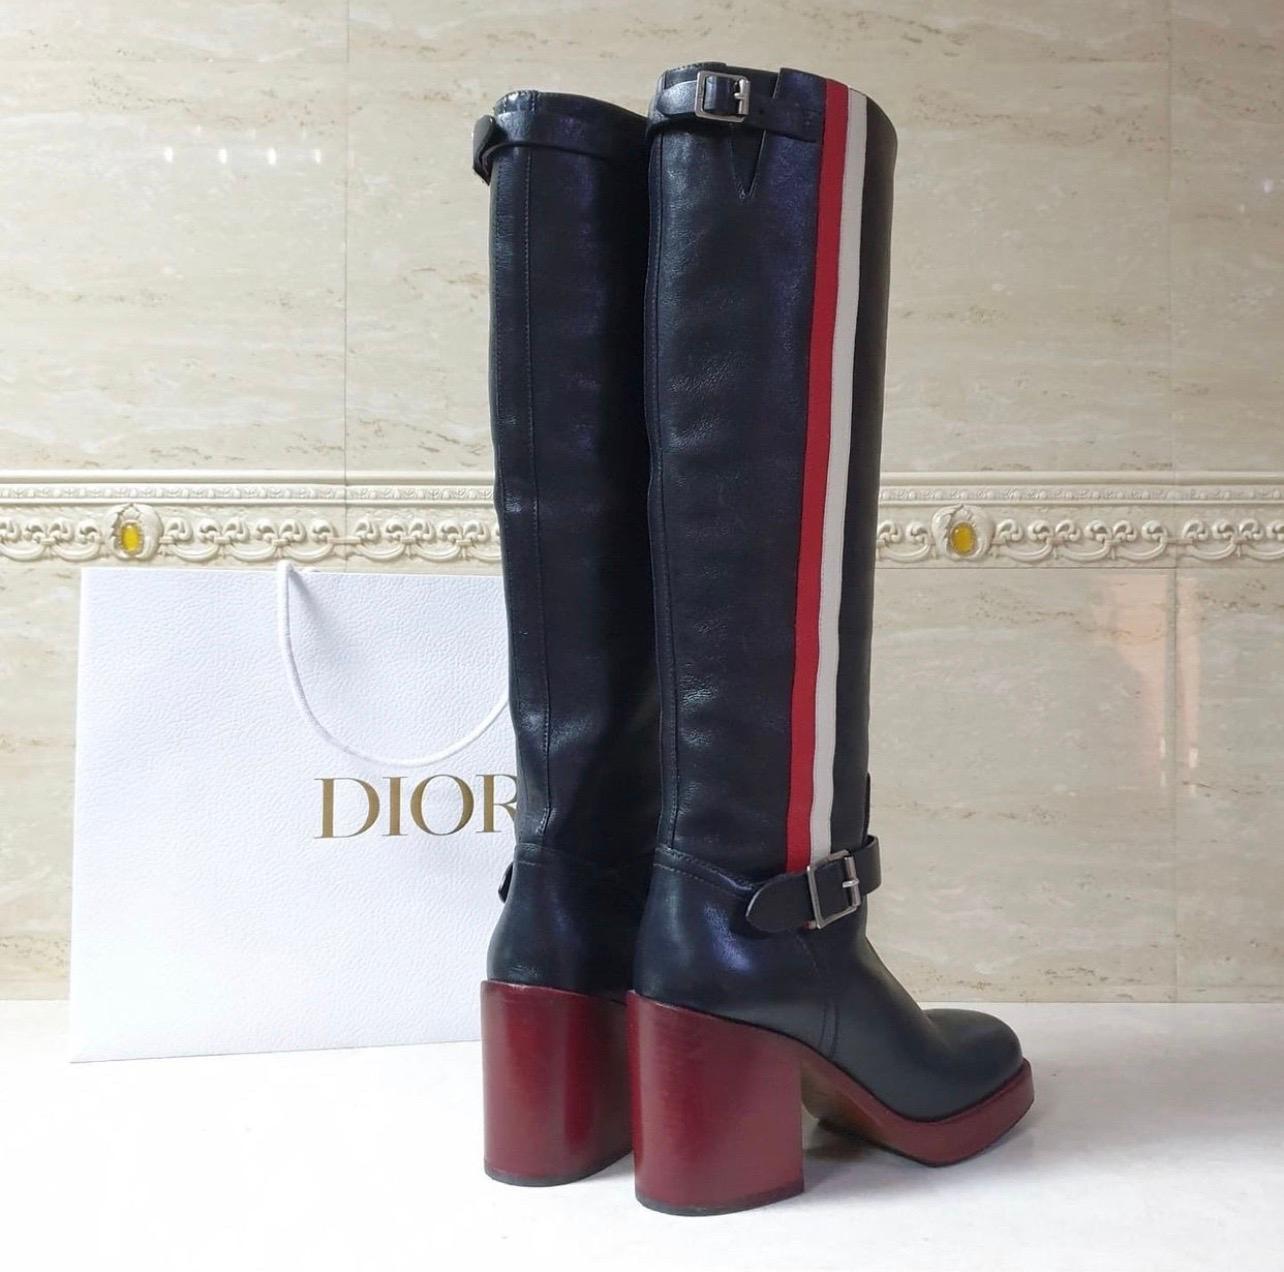 dior tall boots